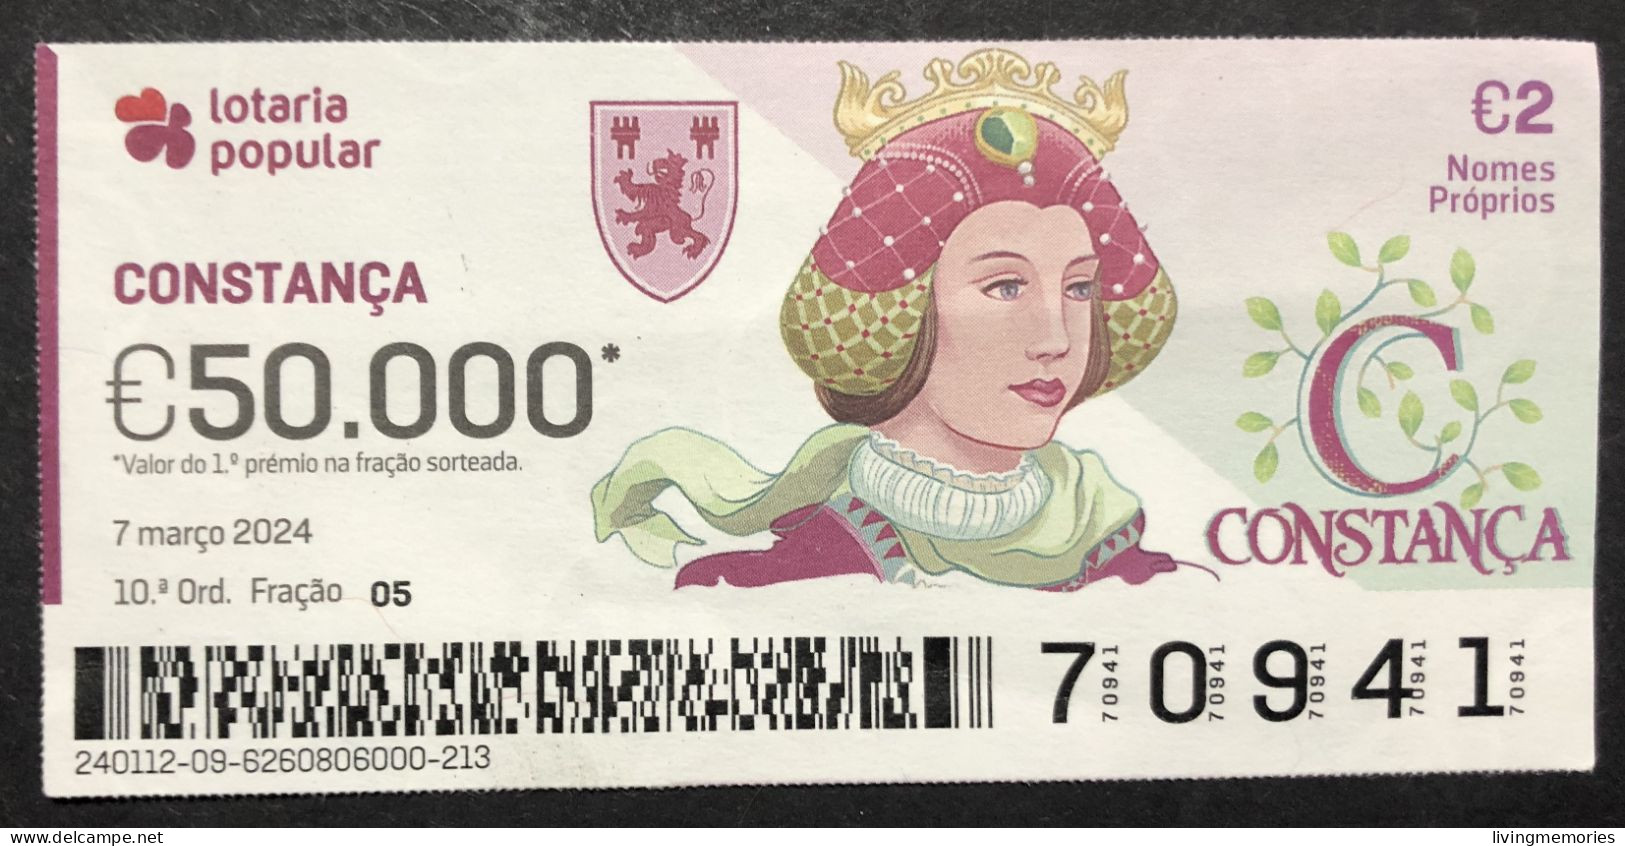 116 P, 1 X Lottery Ticket, Portugal, « NOMES Próprios: CONSTANÇA », « First NAMES: CONSTANÇA », «NOM: CONSTANÇA »,  2024 - Billets De Loterie